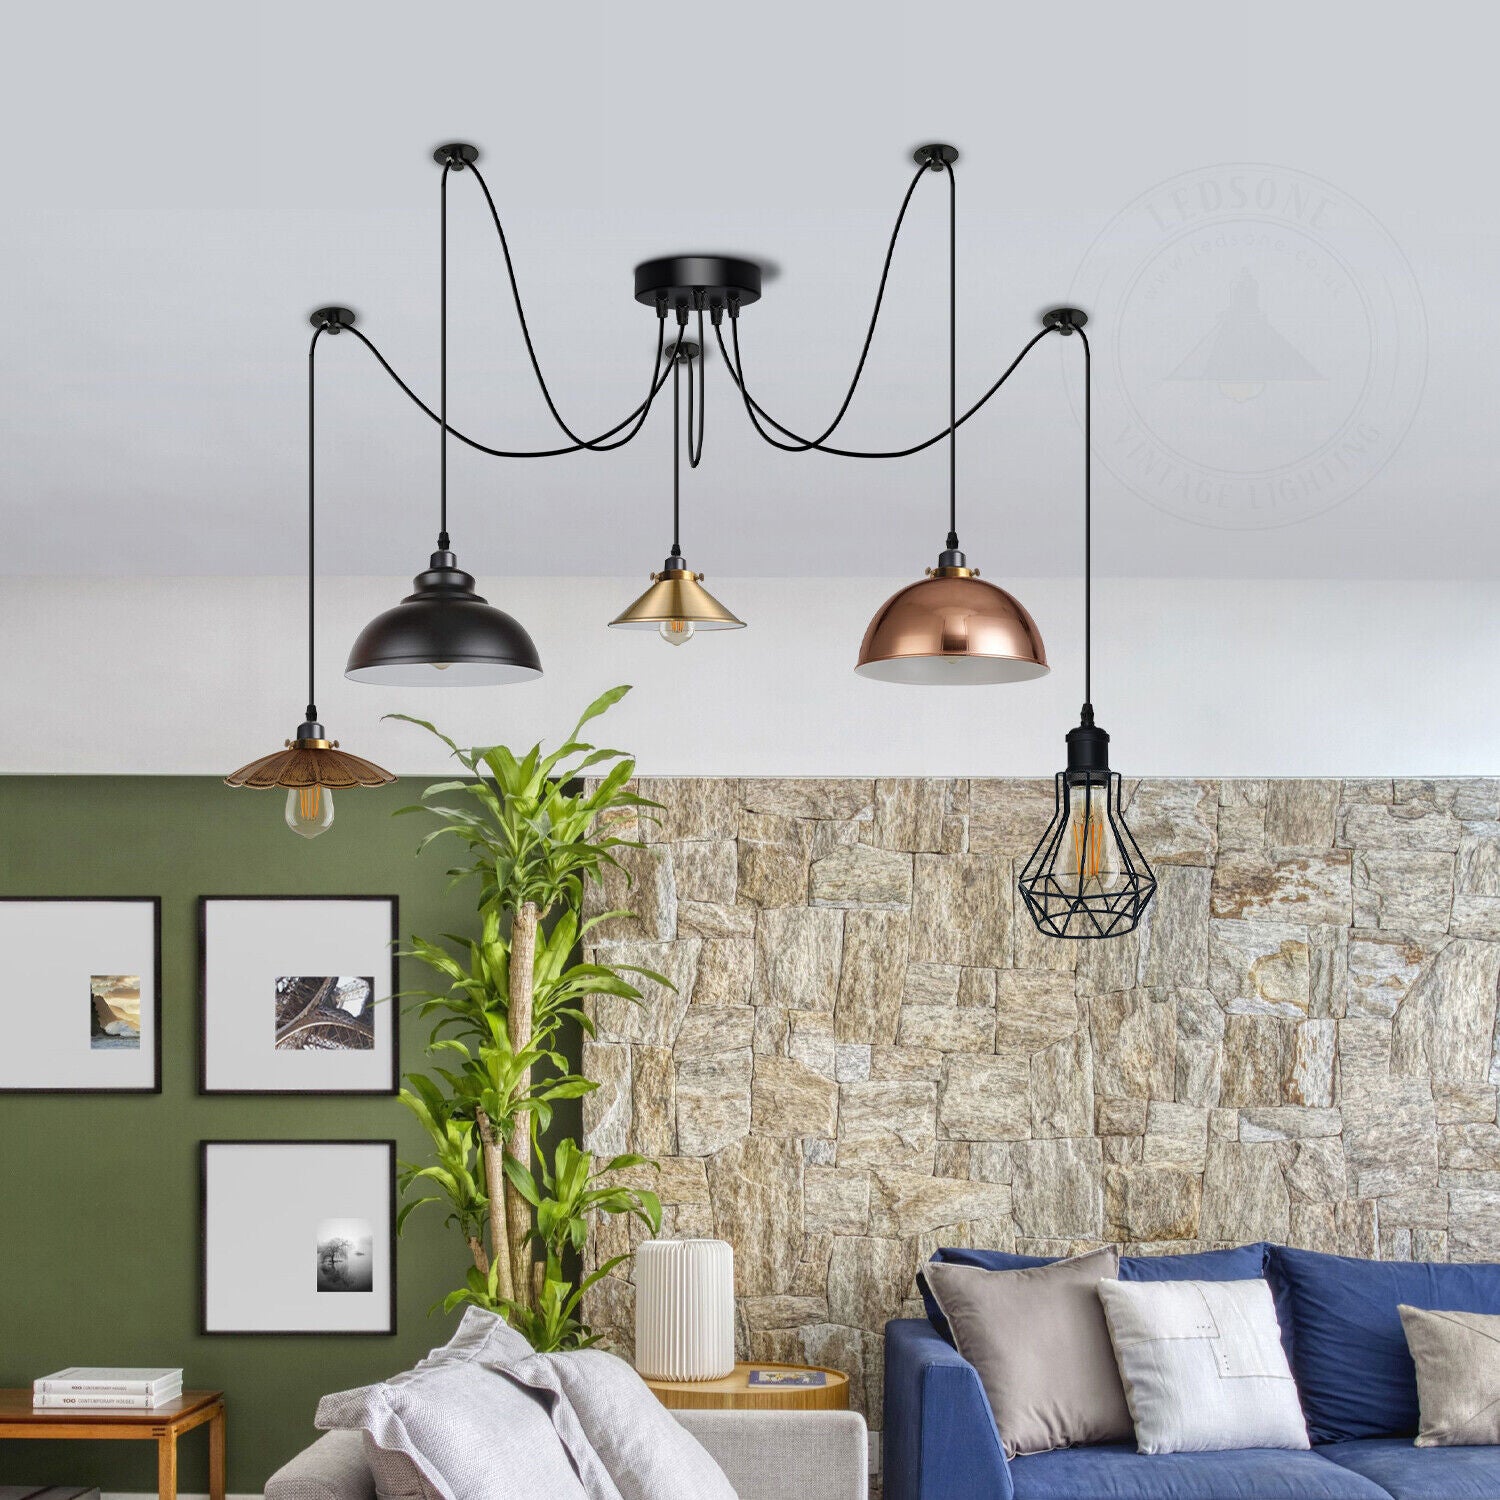 Vintage Ceiling Pendant Light Lamp Shade Industrial Chandelier Spider Lamp~4463